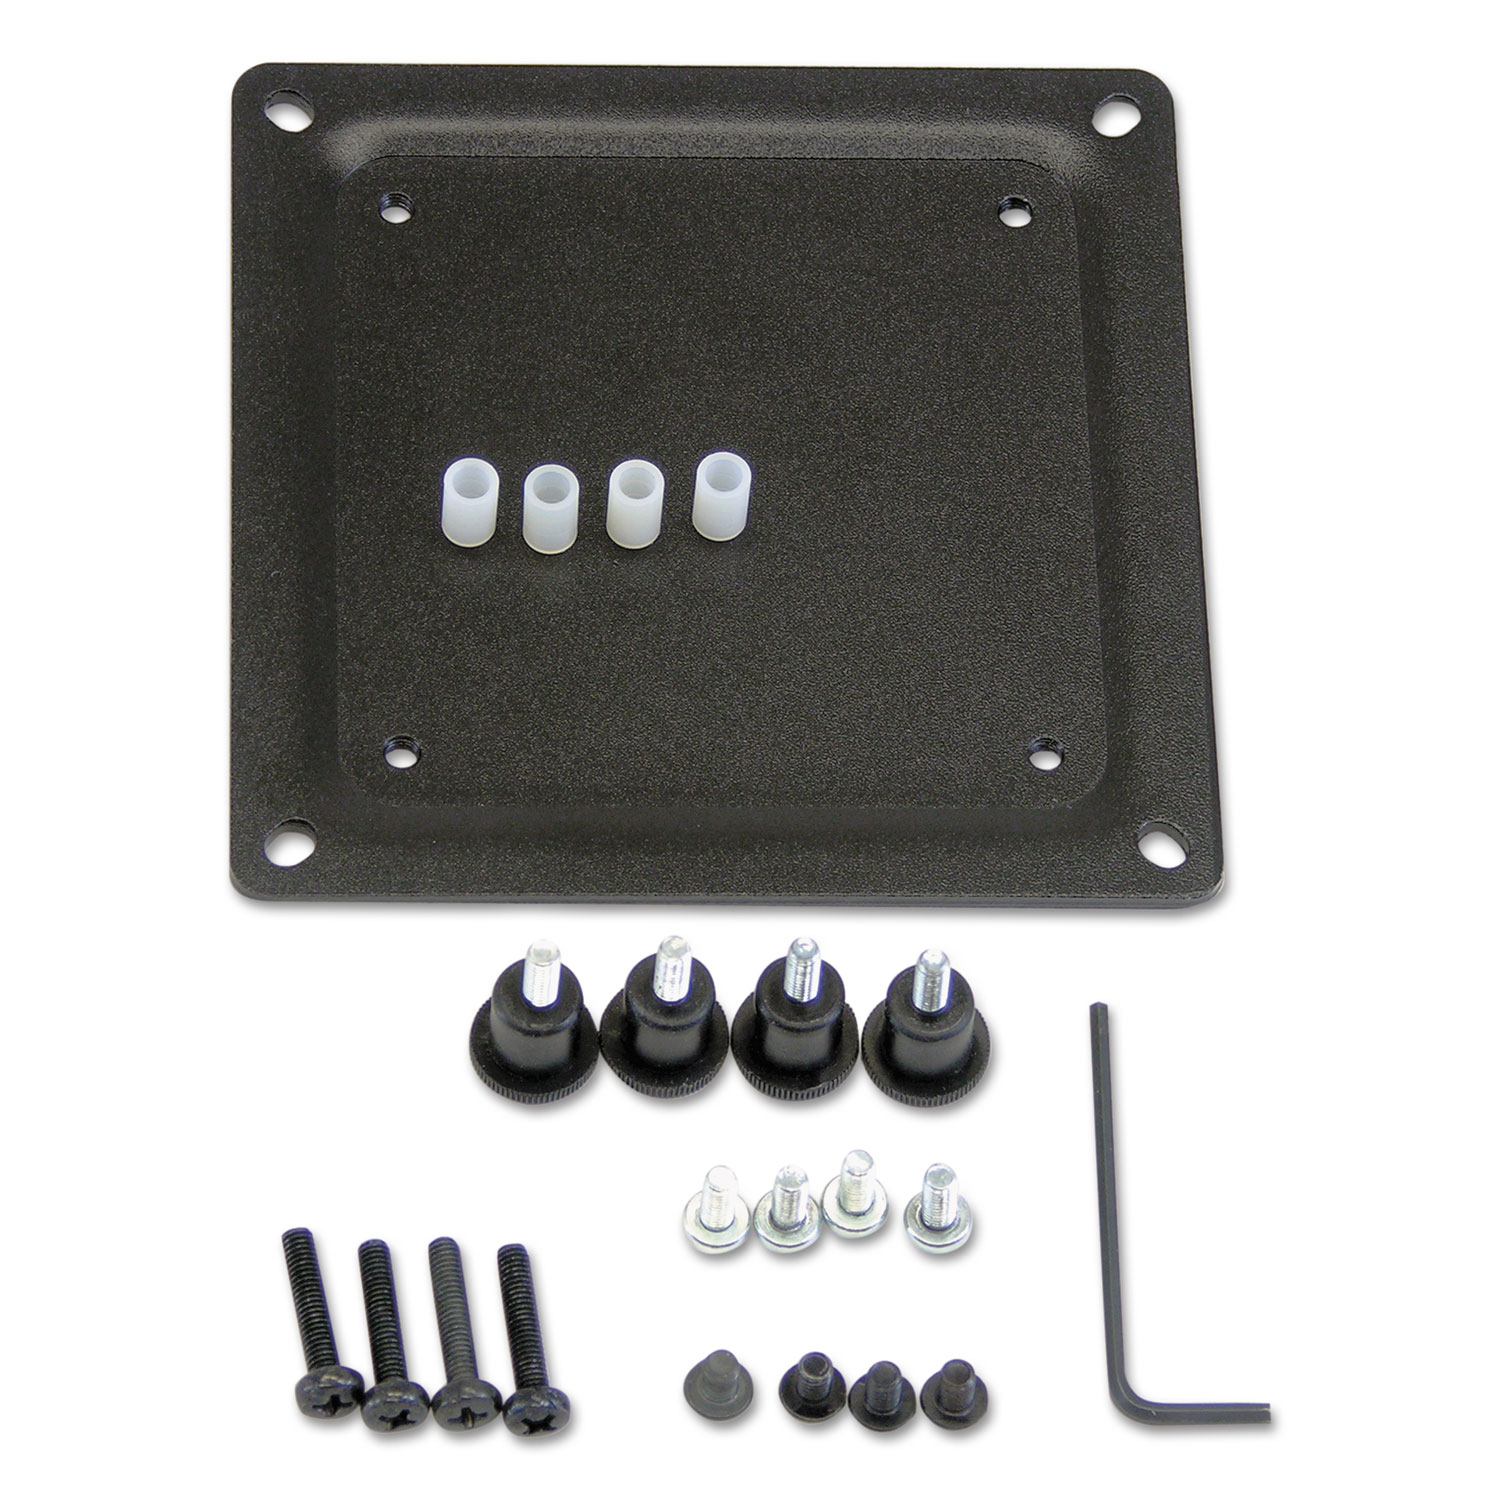  Ergotron 60-254-007 75 mm to 100 mm Conversion Plate Kit, Black (ERG60254007) 